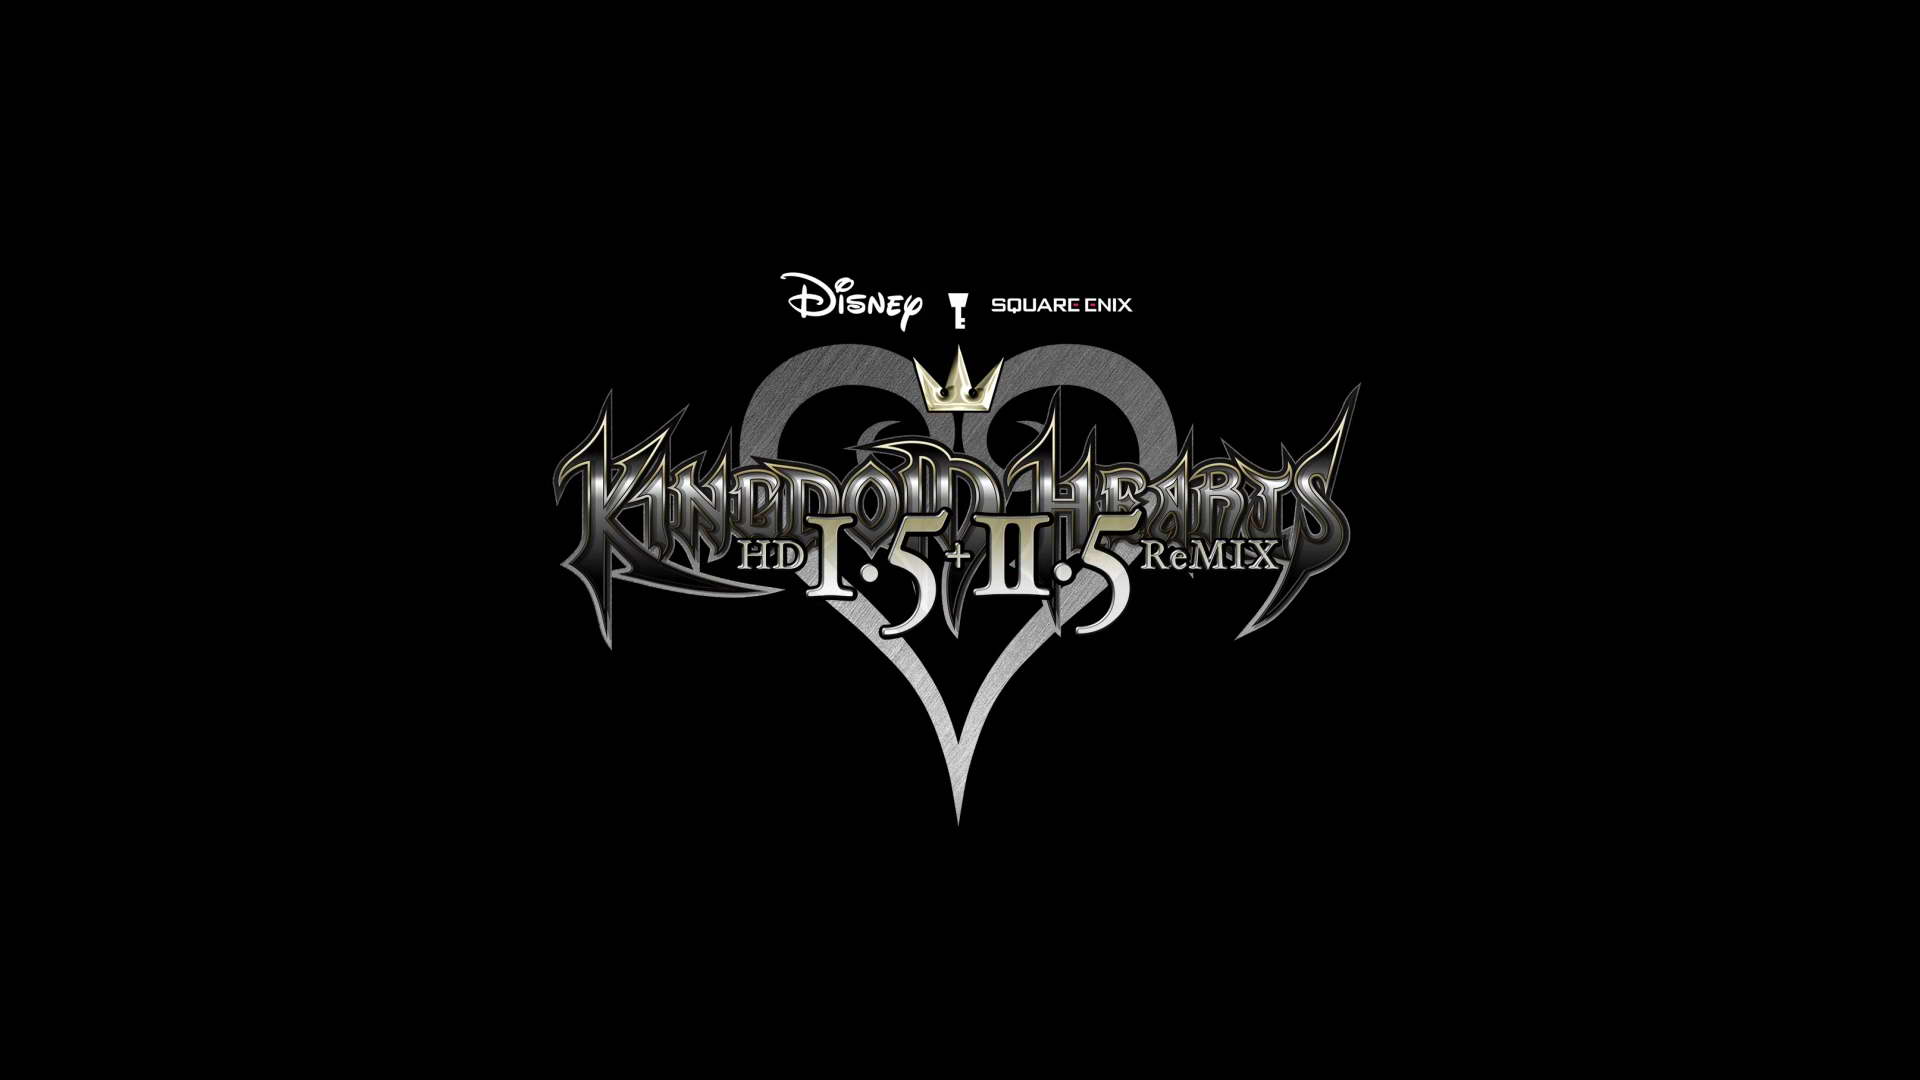 Kingdom Hearts 1.5 + 2.5 Remix sẽ lên PS4 - Tin Game